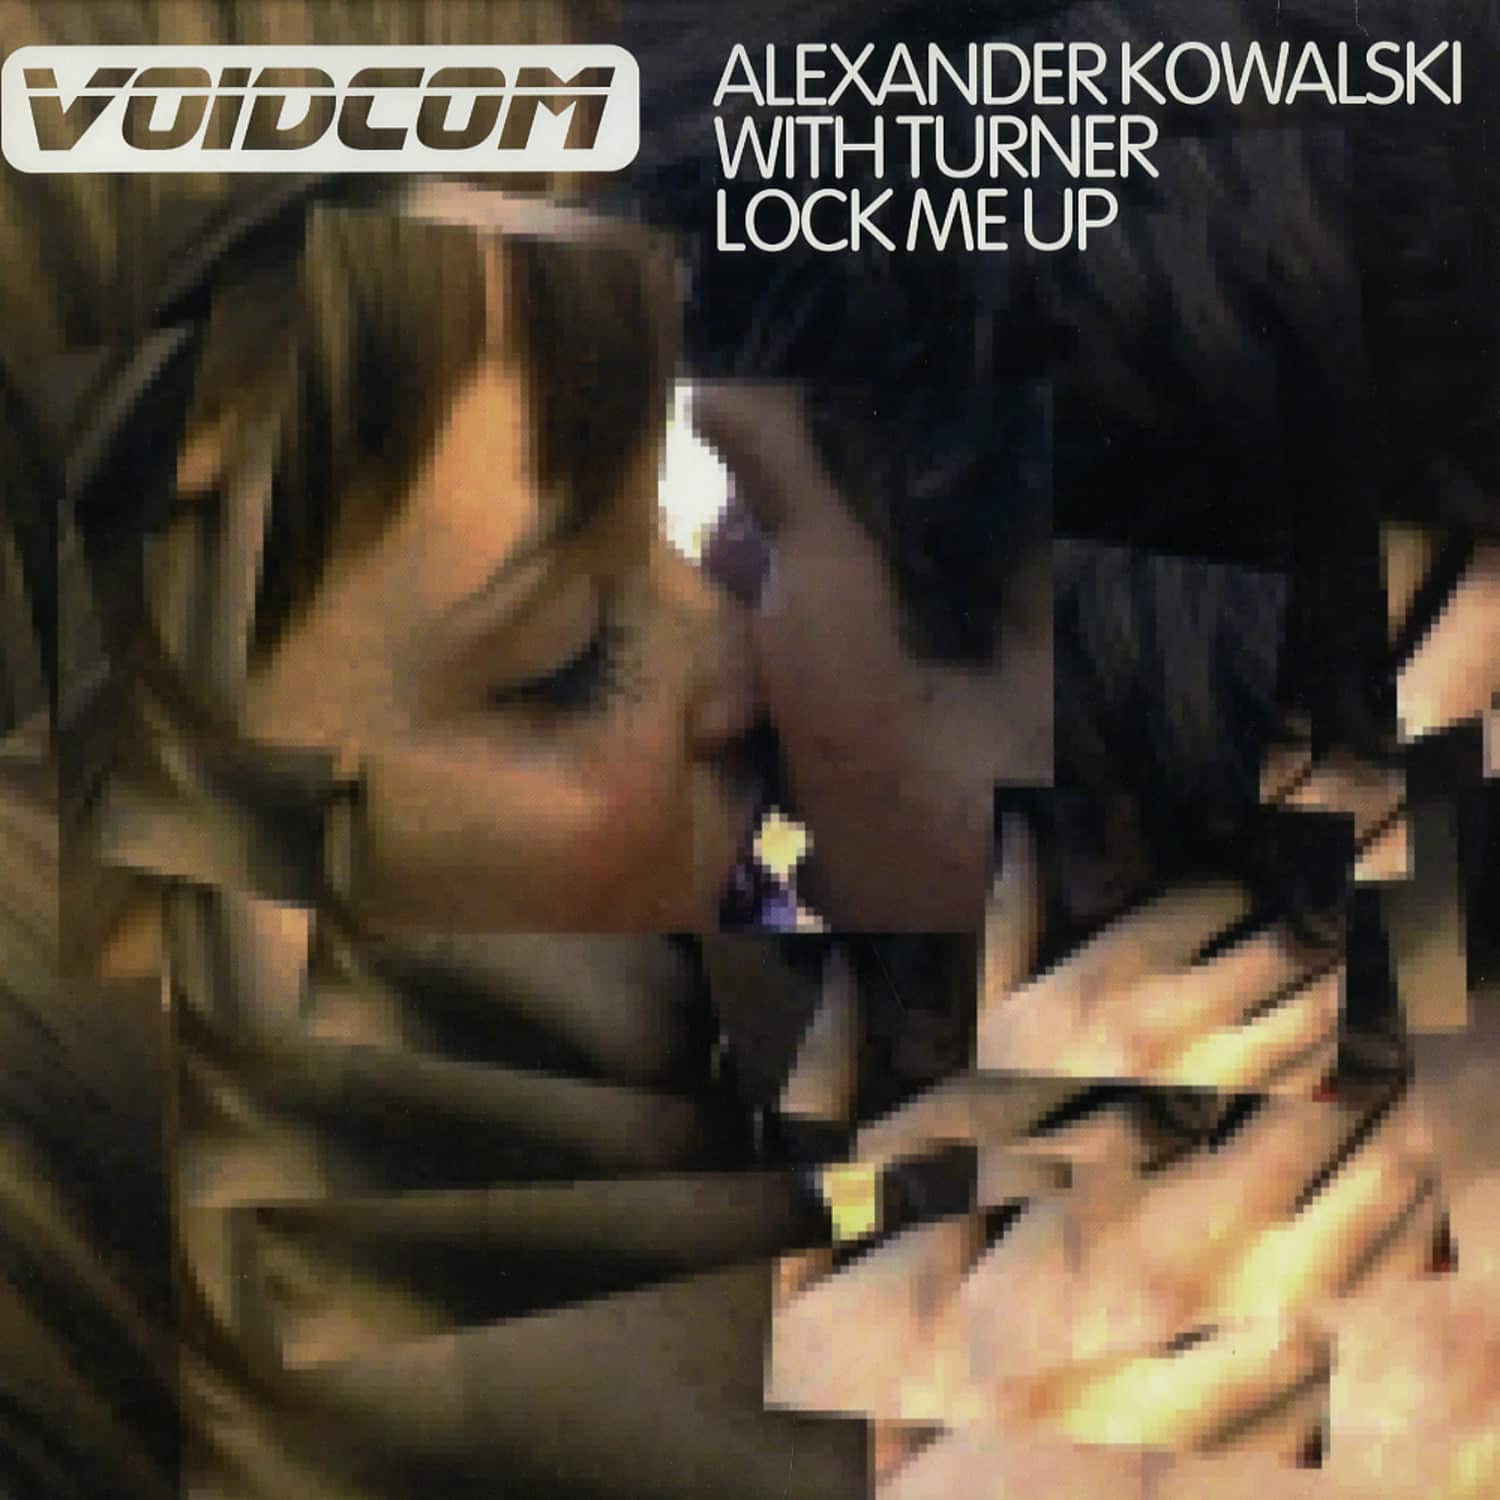 Alexander Kowalski with Turner - LOCK ME UP 